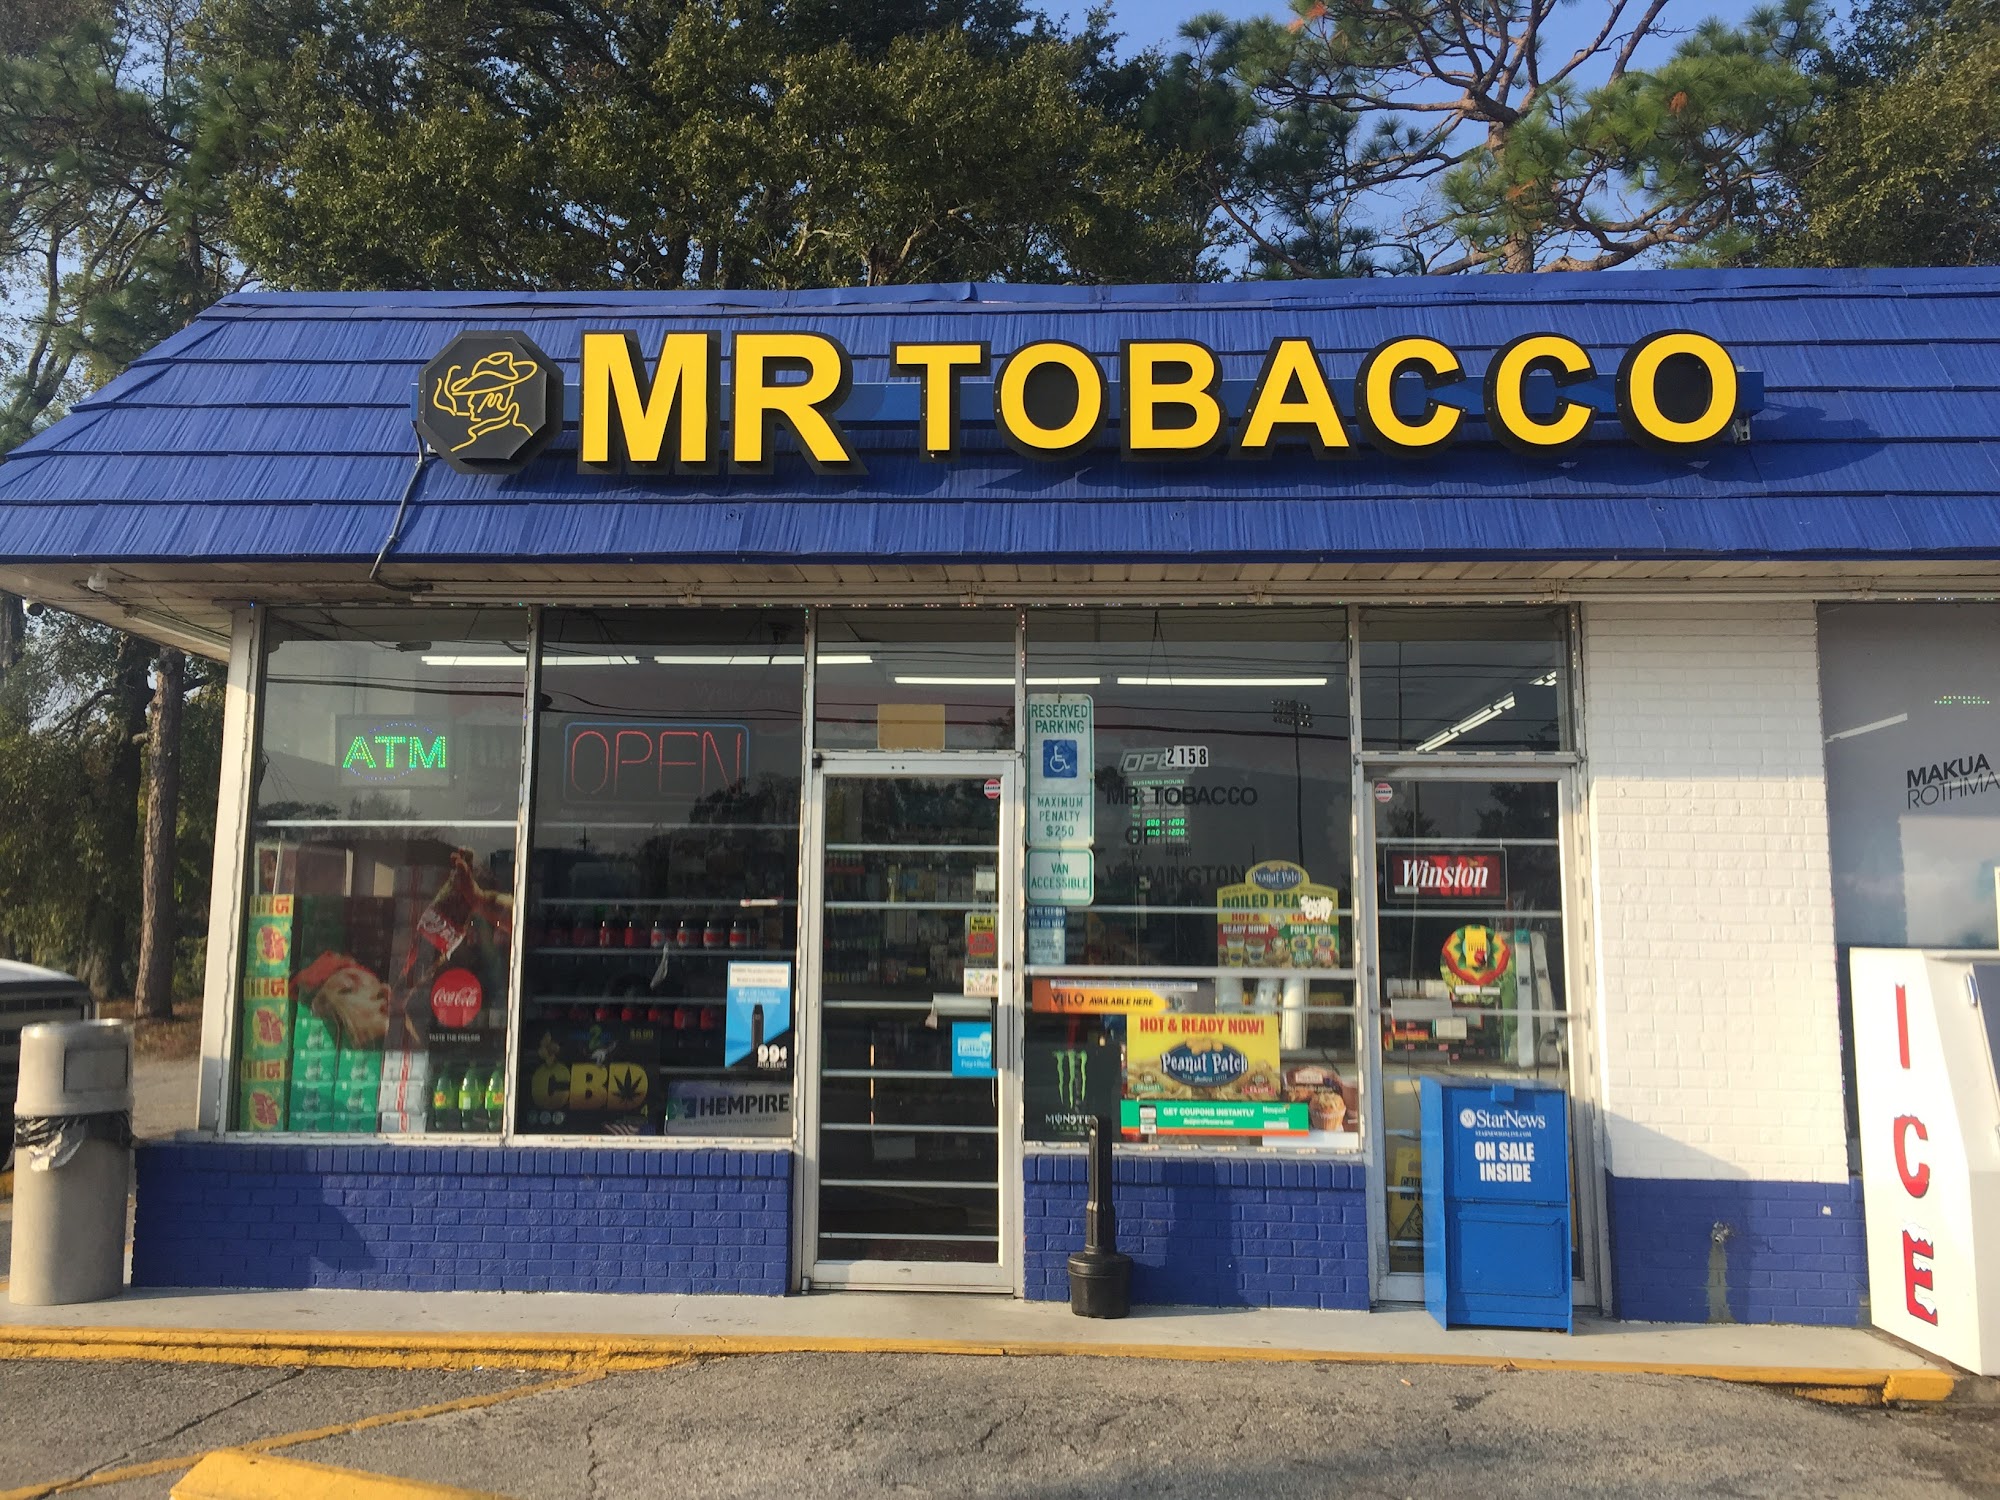 Mr Tobacco / expressway